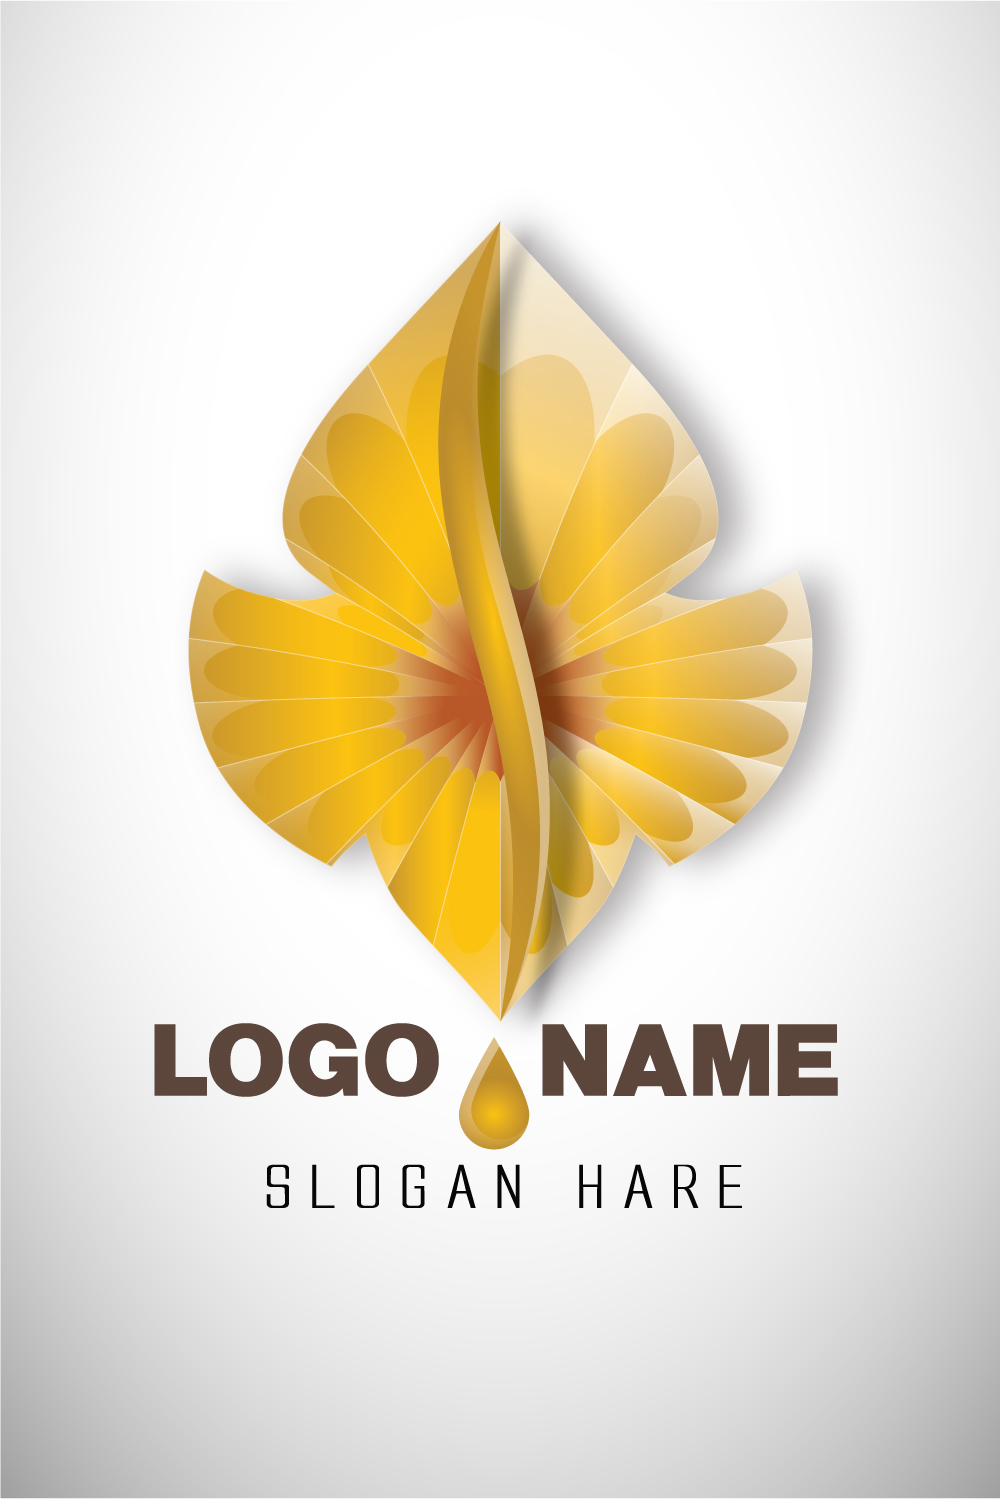 3d-golden-lotus-flower-shape-logo pinterest preview image.